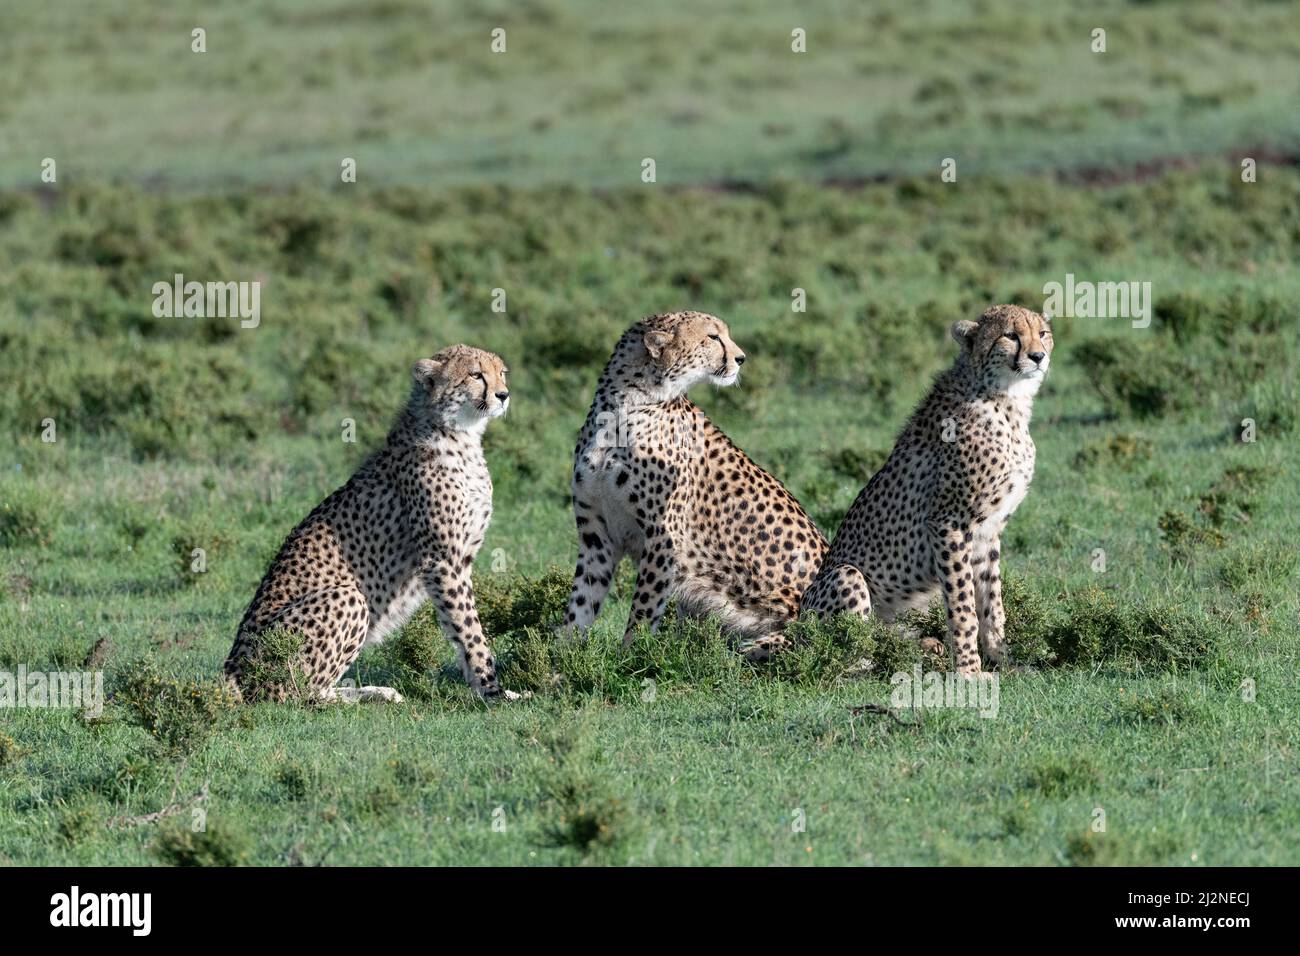 three Cheetahs sitting together in the savannah Stock Photo